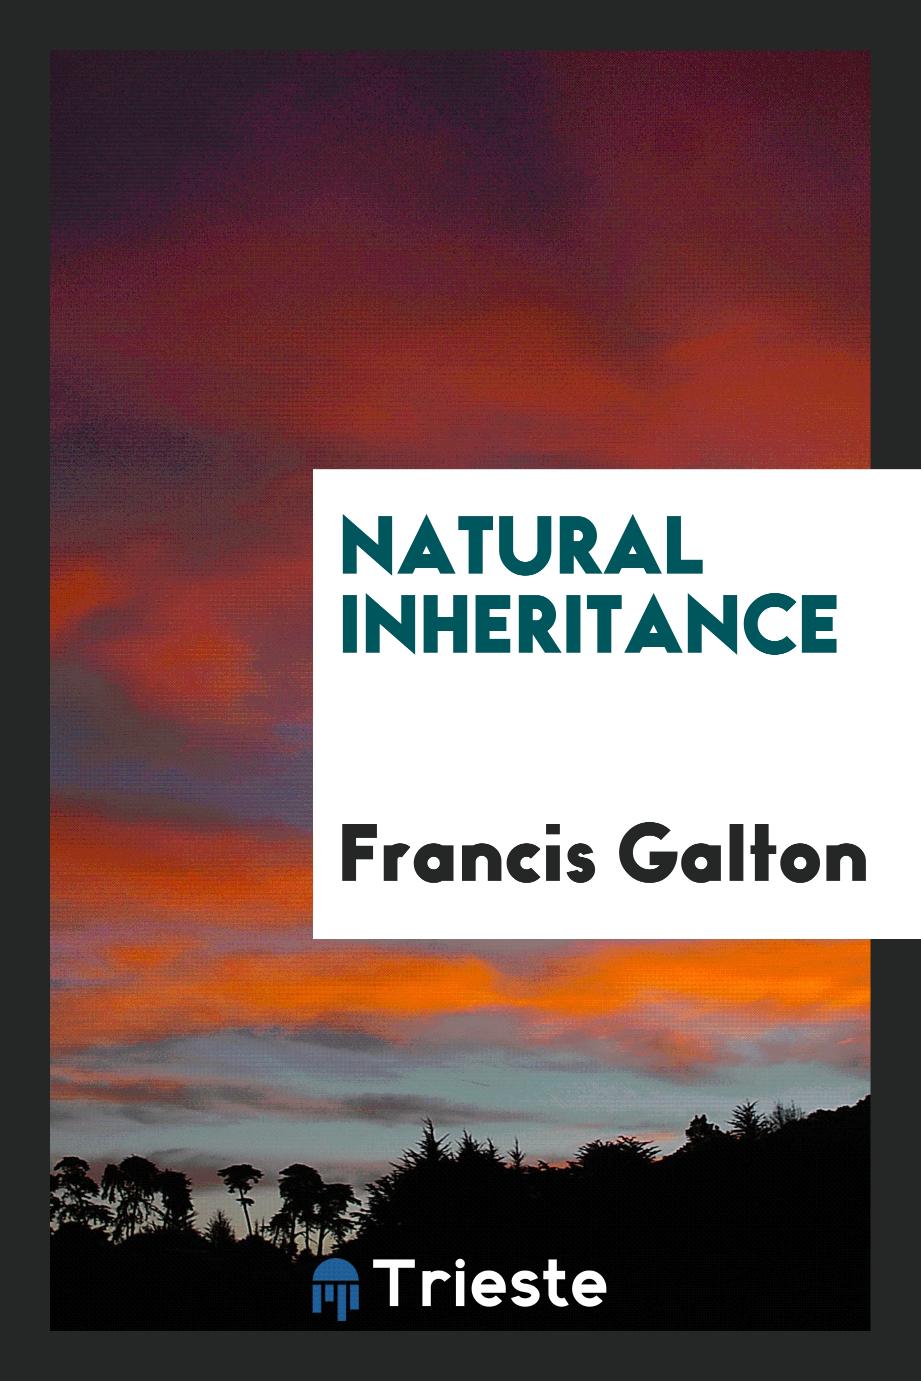 Francis Galton - Natural inheritance